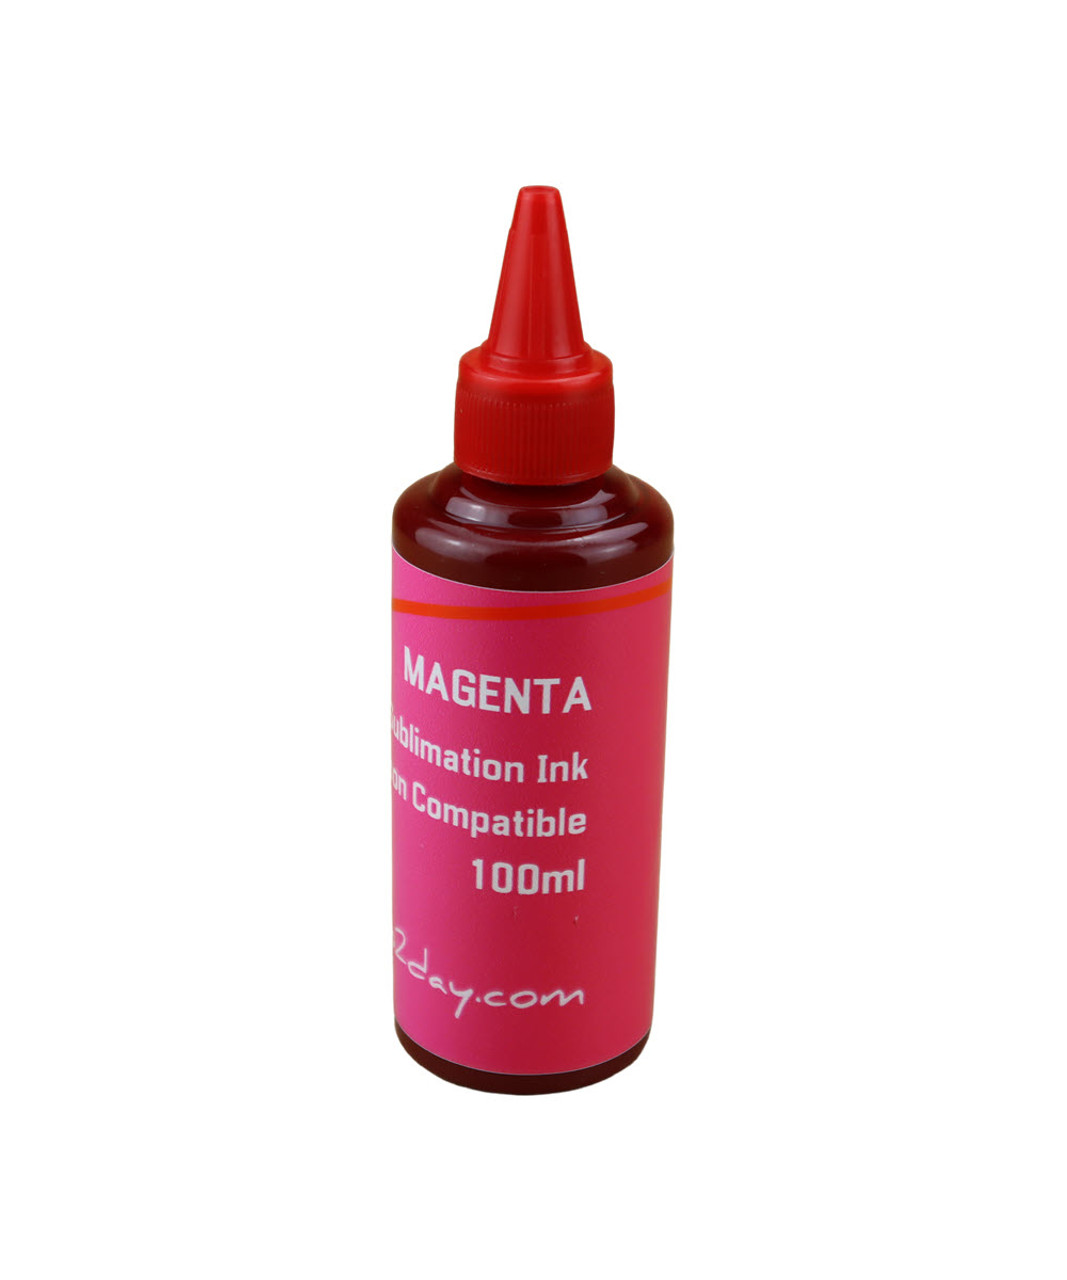 Magenta 100ml Bottle Dye Sublimation Ink For Epson Workforce Pro Wf 7310 Wf 7820 Wf 7840 Printers 6329